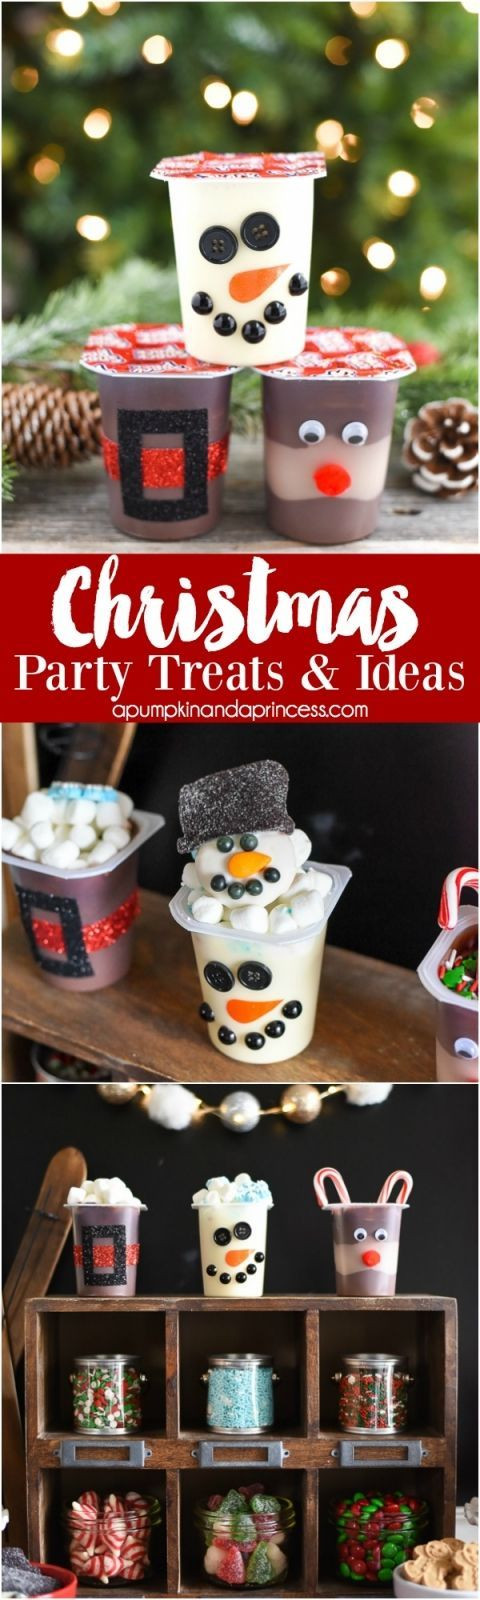 School Holiday Party Ideas
 Best 25 School christmas party ideas on Pinterest